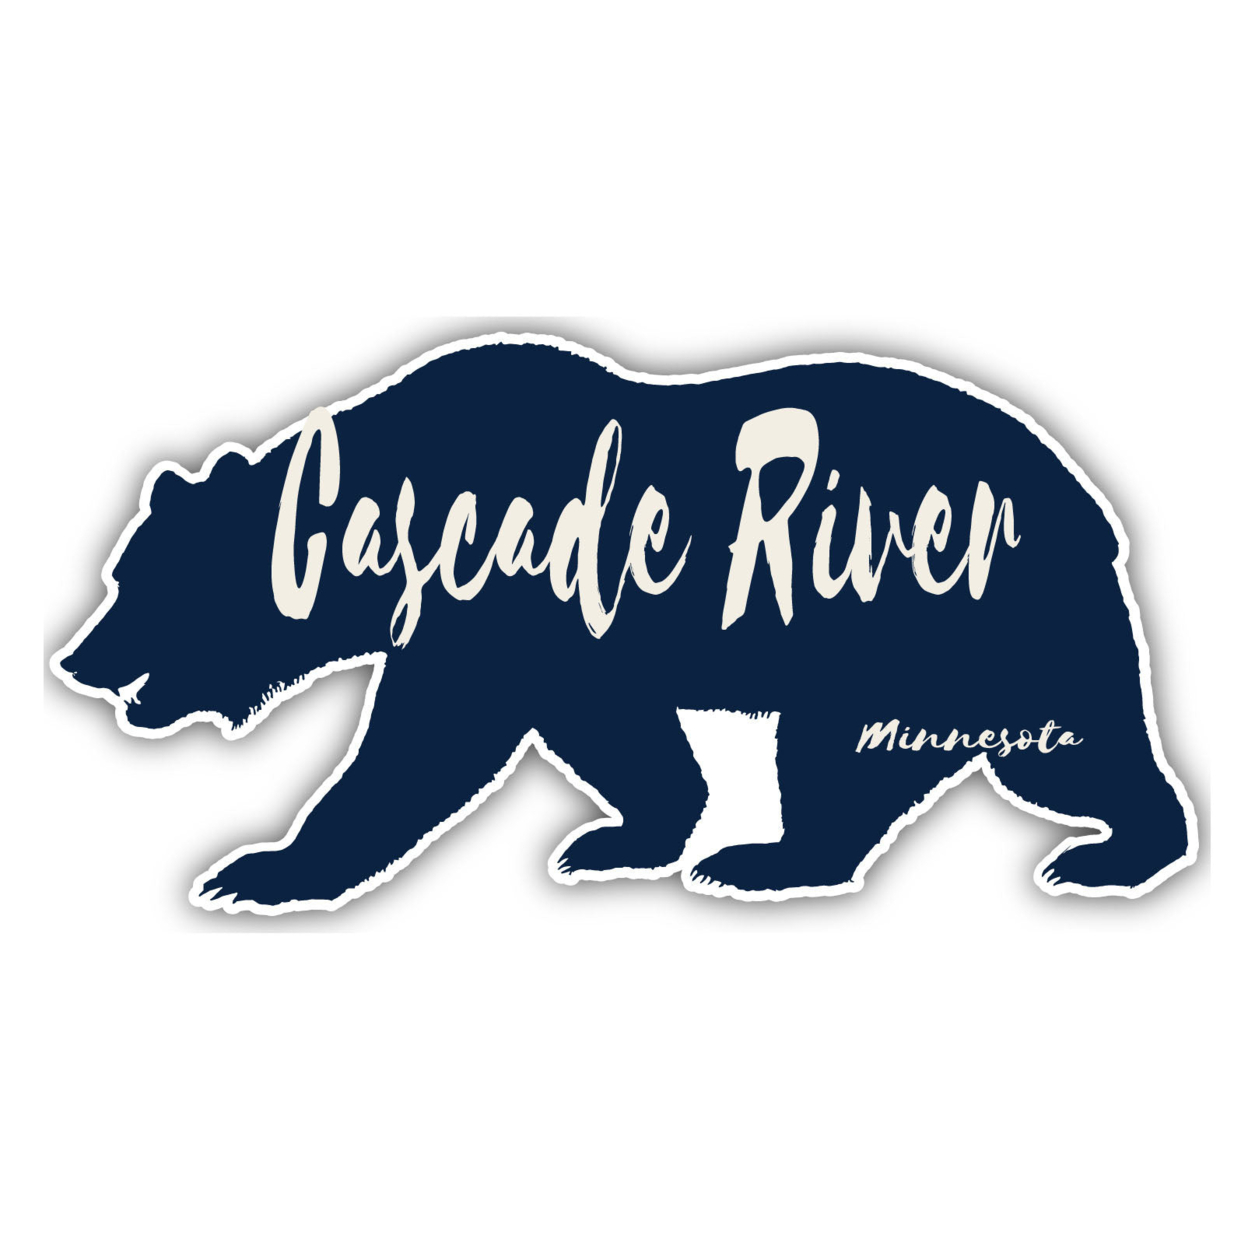 Cascade River Minnesota Souvenir Decorative Stickers (Choose Theme And Size) - 4-Pack, 4-Inch, Bear